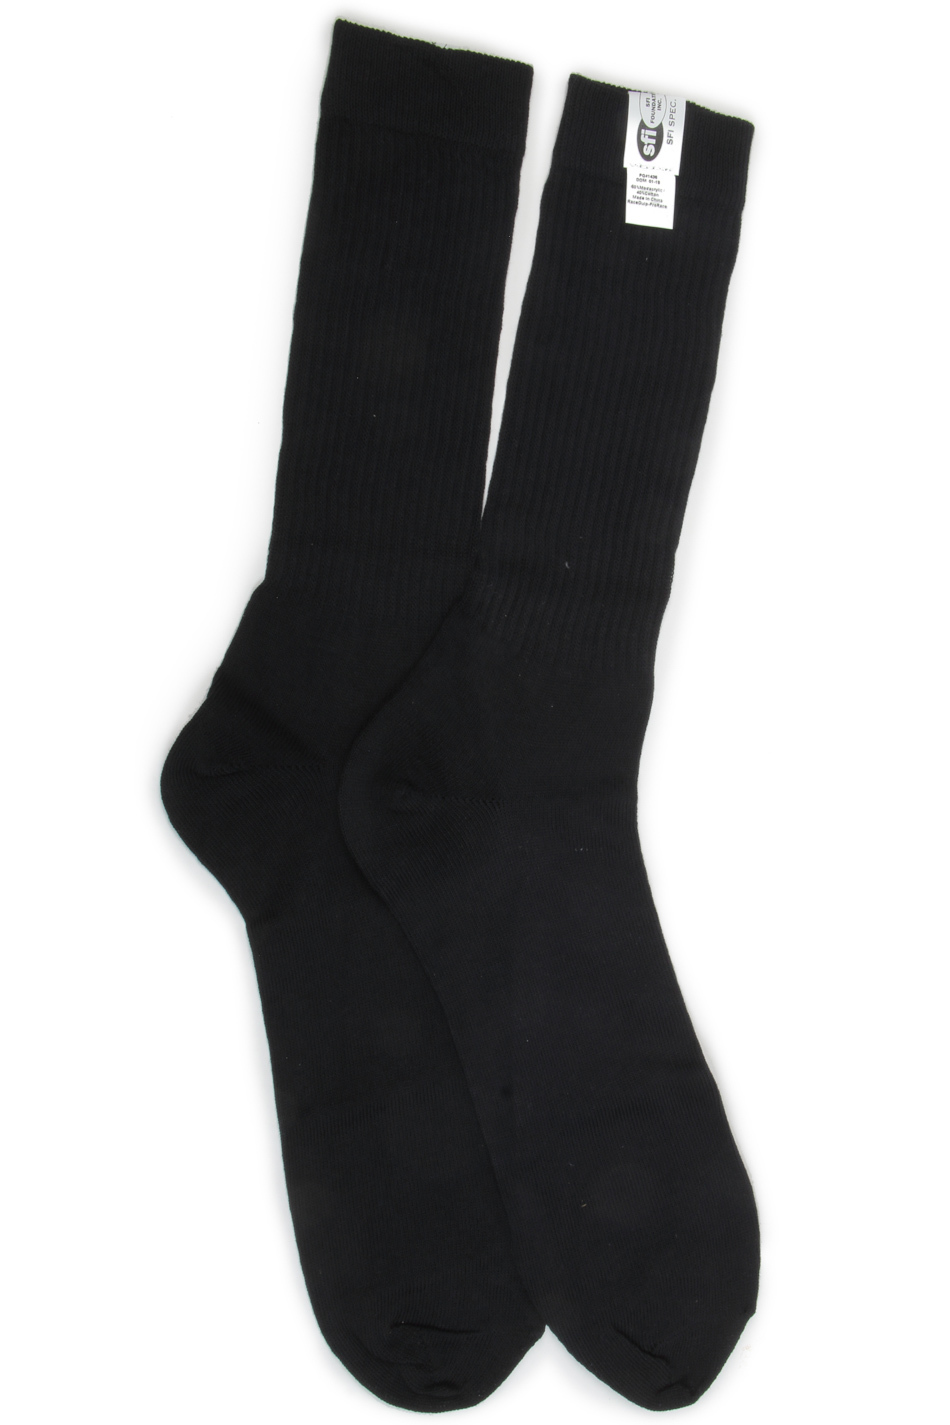 Racequip 411992 Socks, SFI 3.3, Fire Retardant Cotton, Black